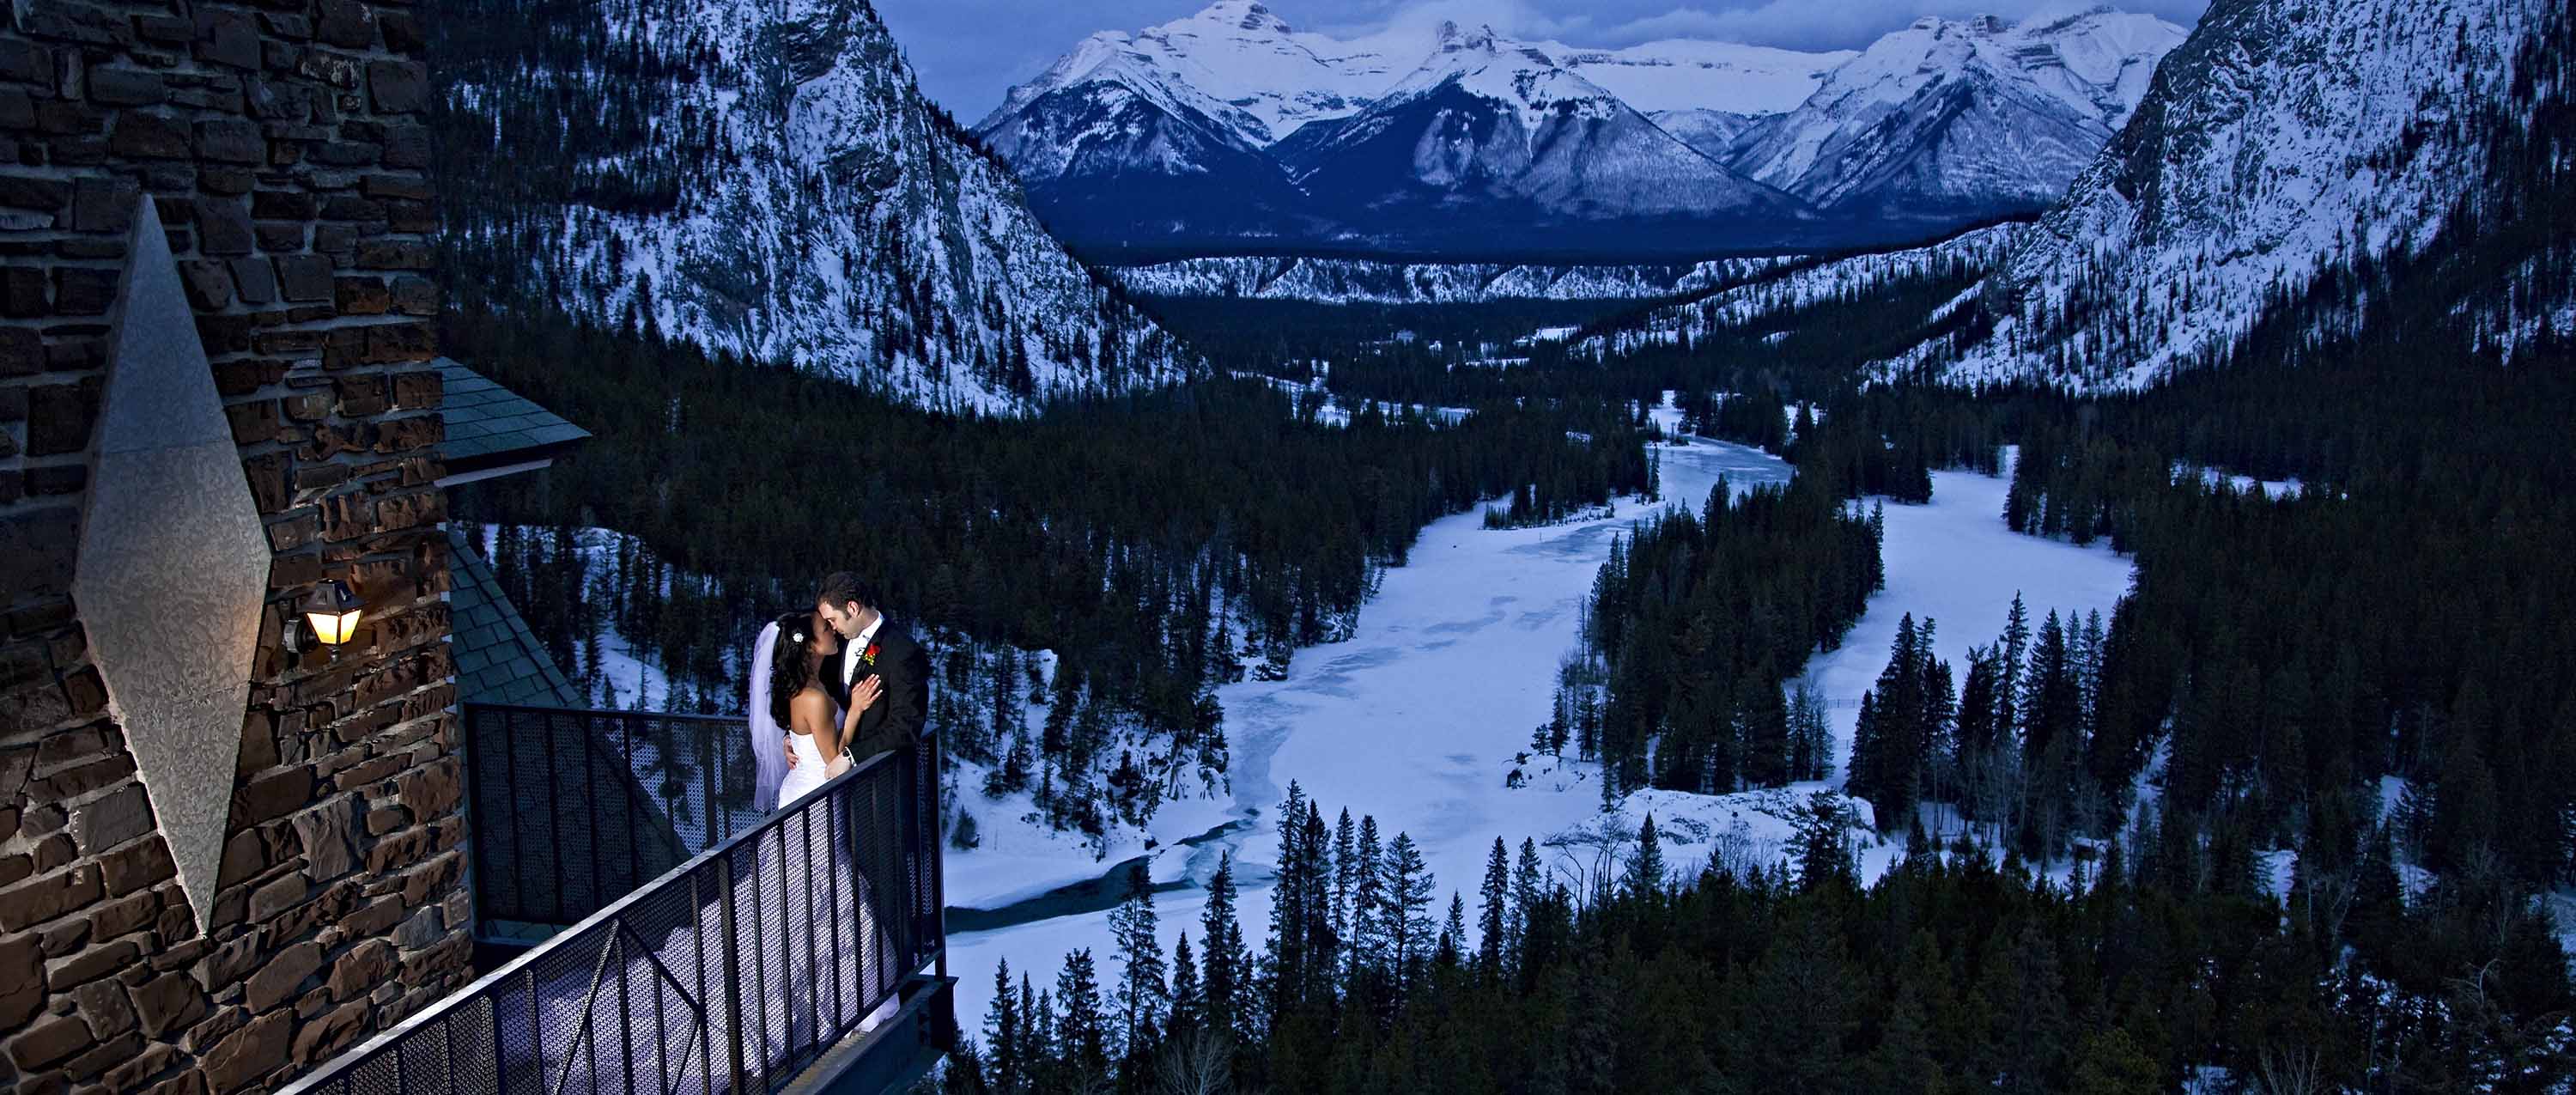 Winter Wedding Offer Banff Springs